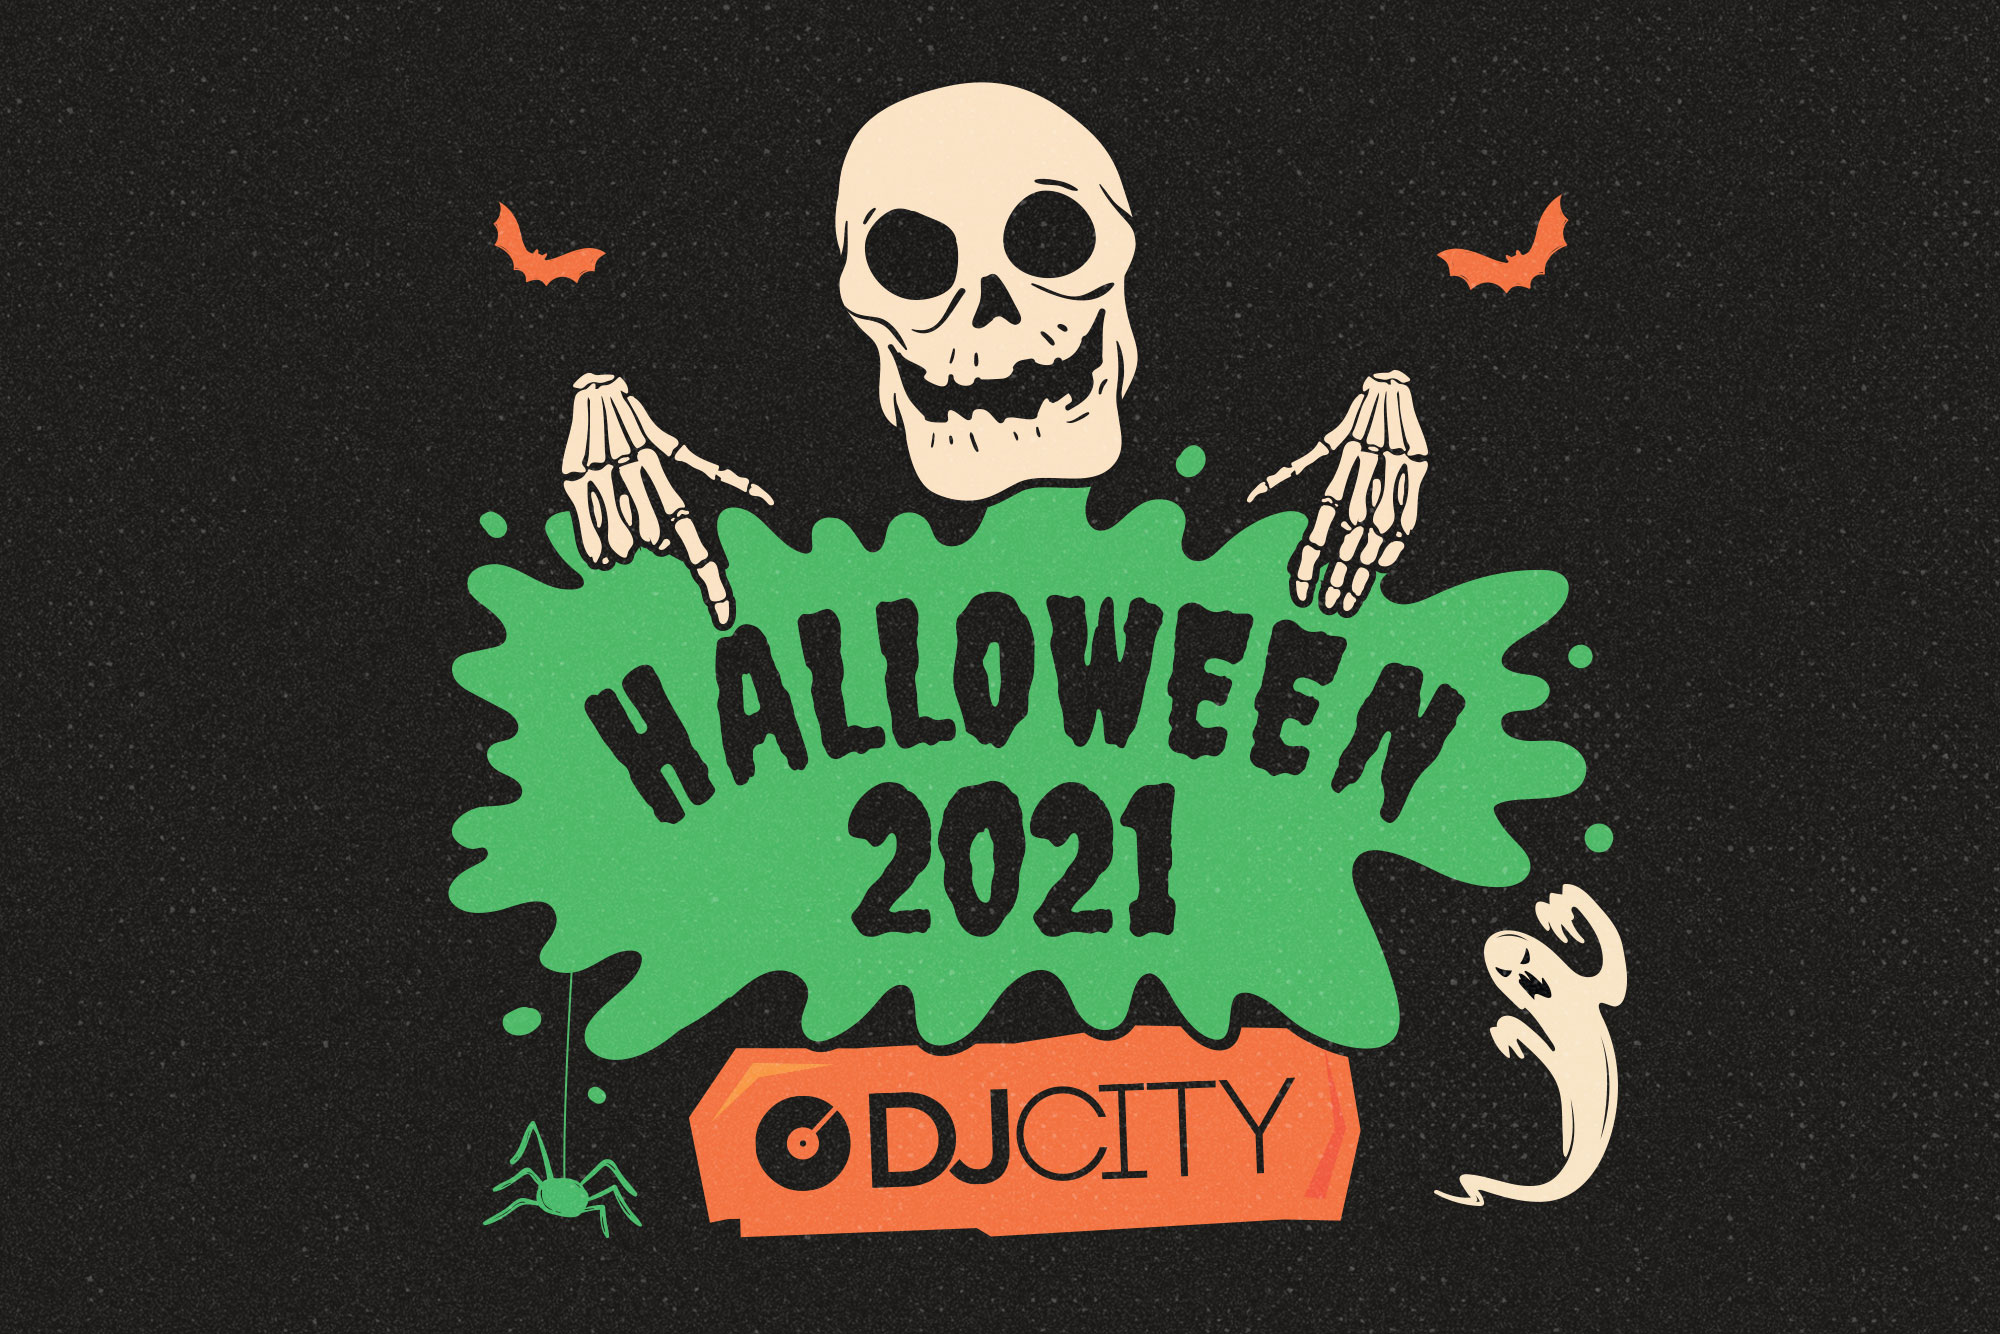 Top Tracks for Halloween 2021